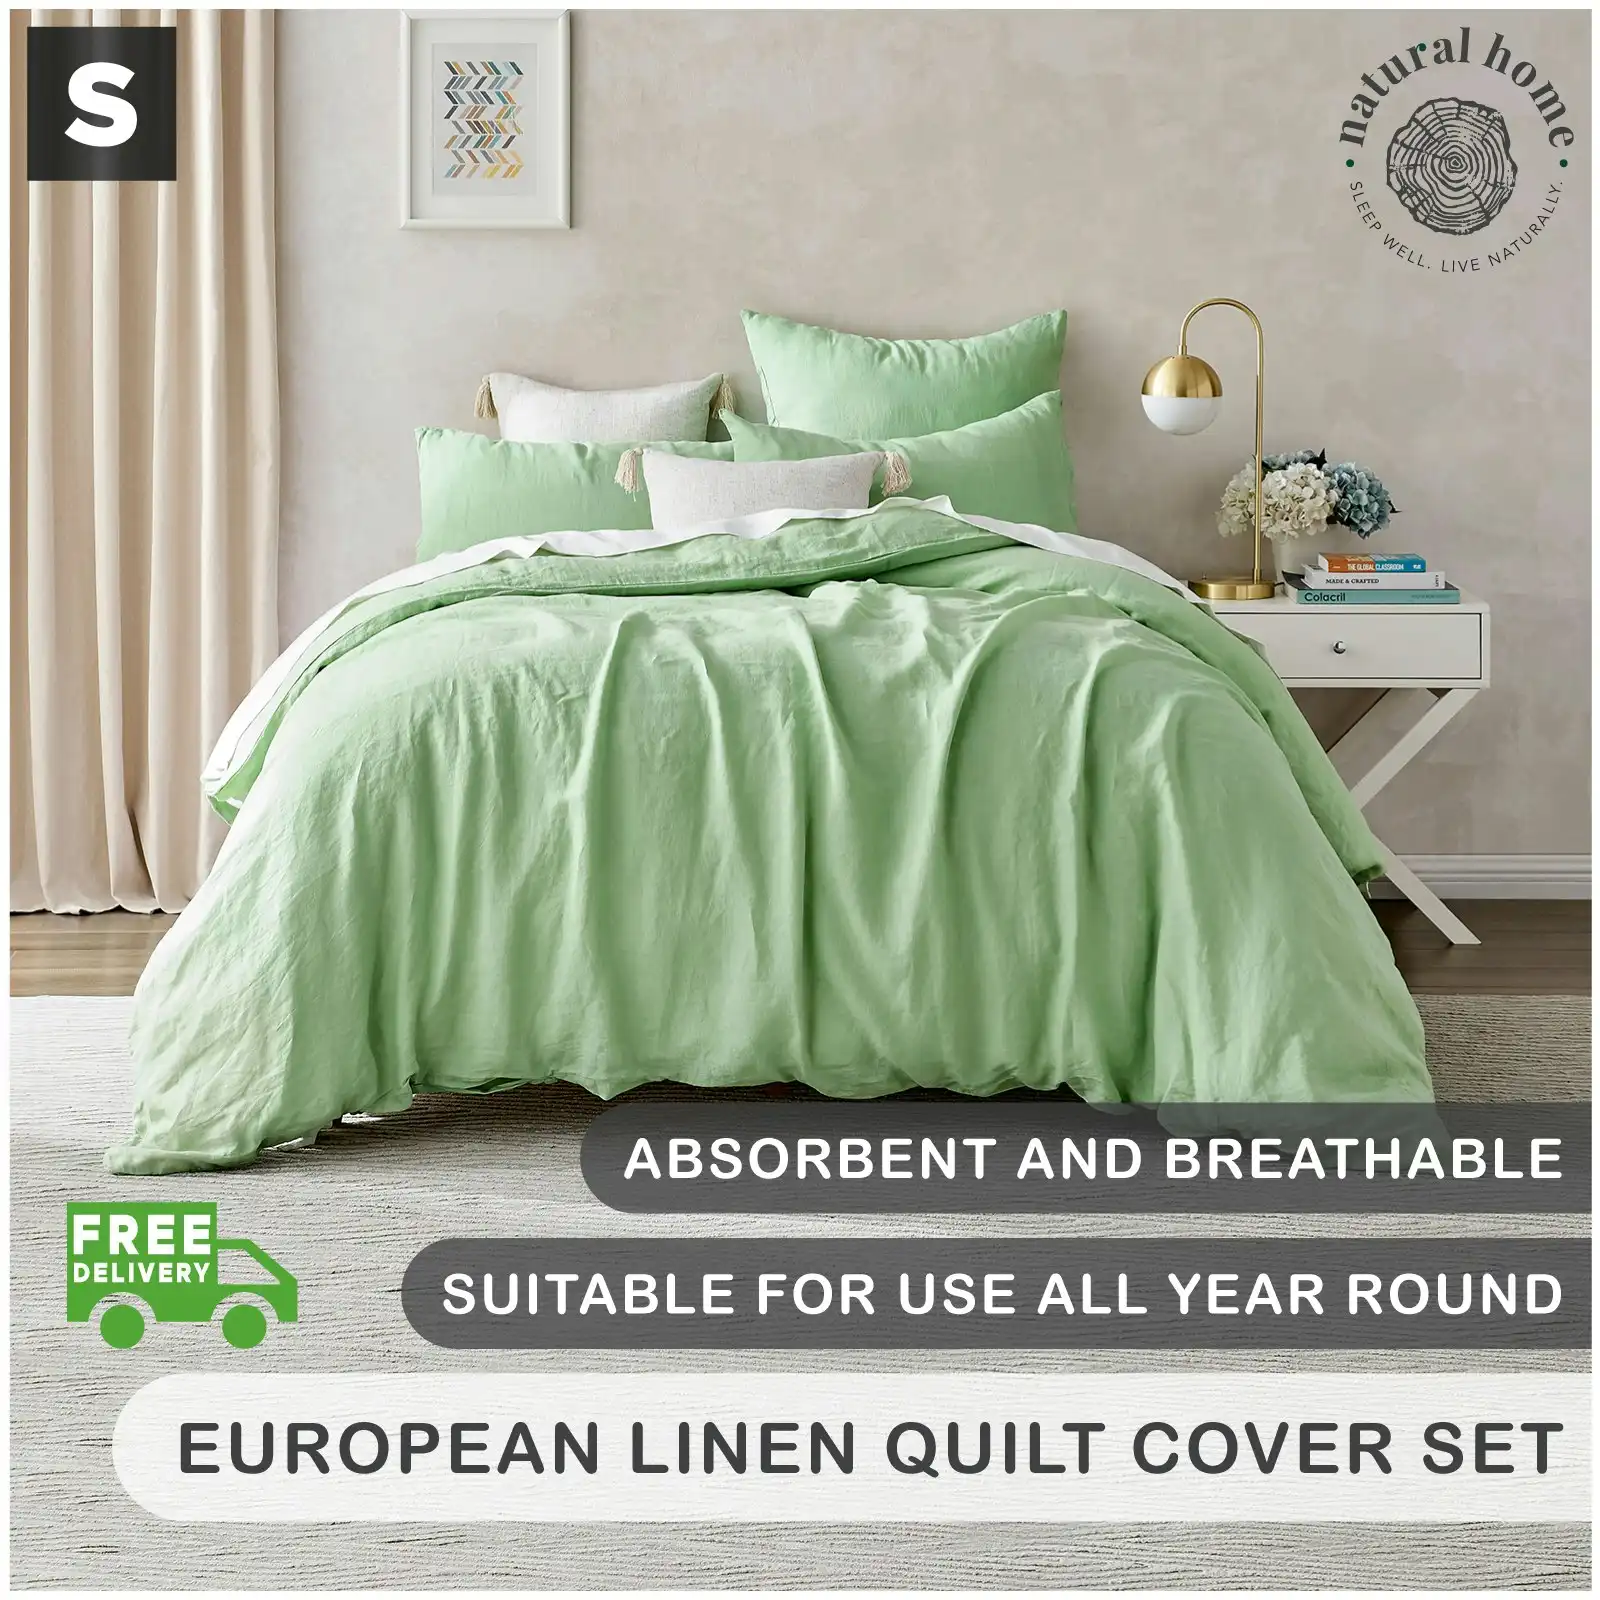 Natural Home Linen 100% European Flax Linen Quilt Cover Set - Sage - Single Bed